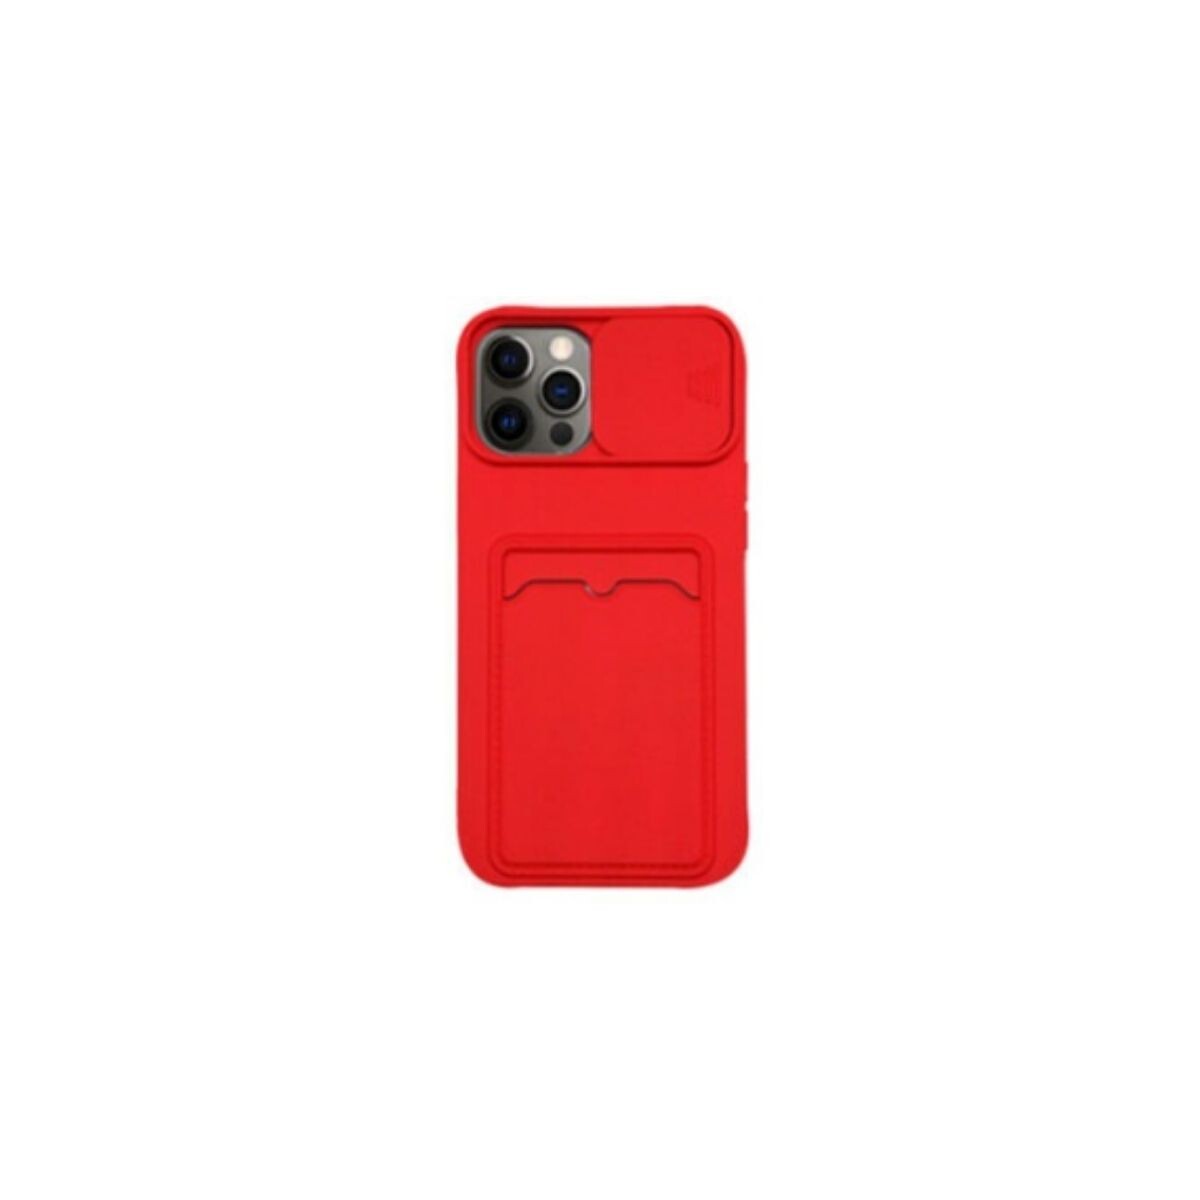 Protector cubre cámara para Iphone 12 rojo 